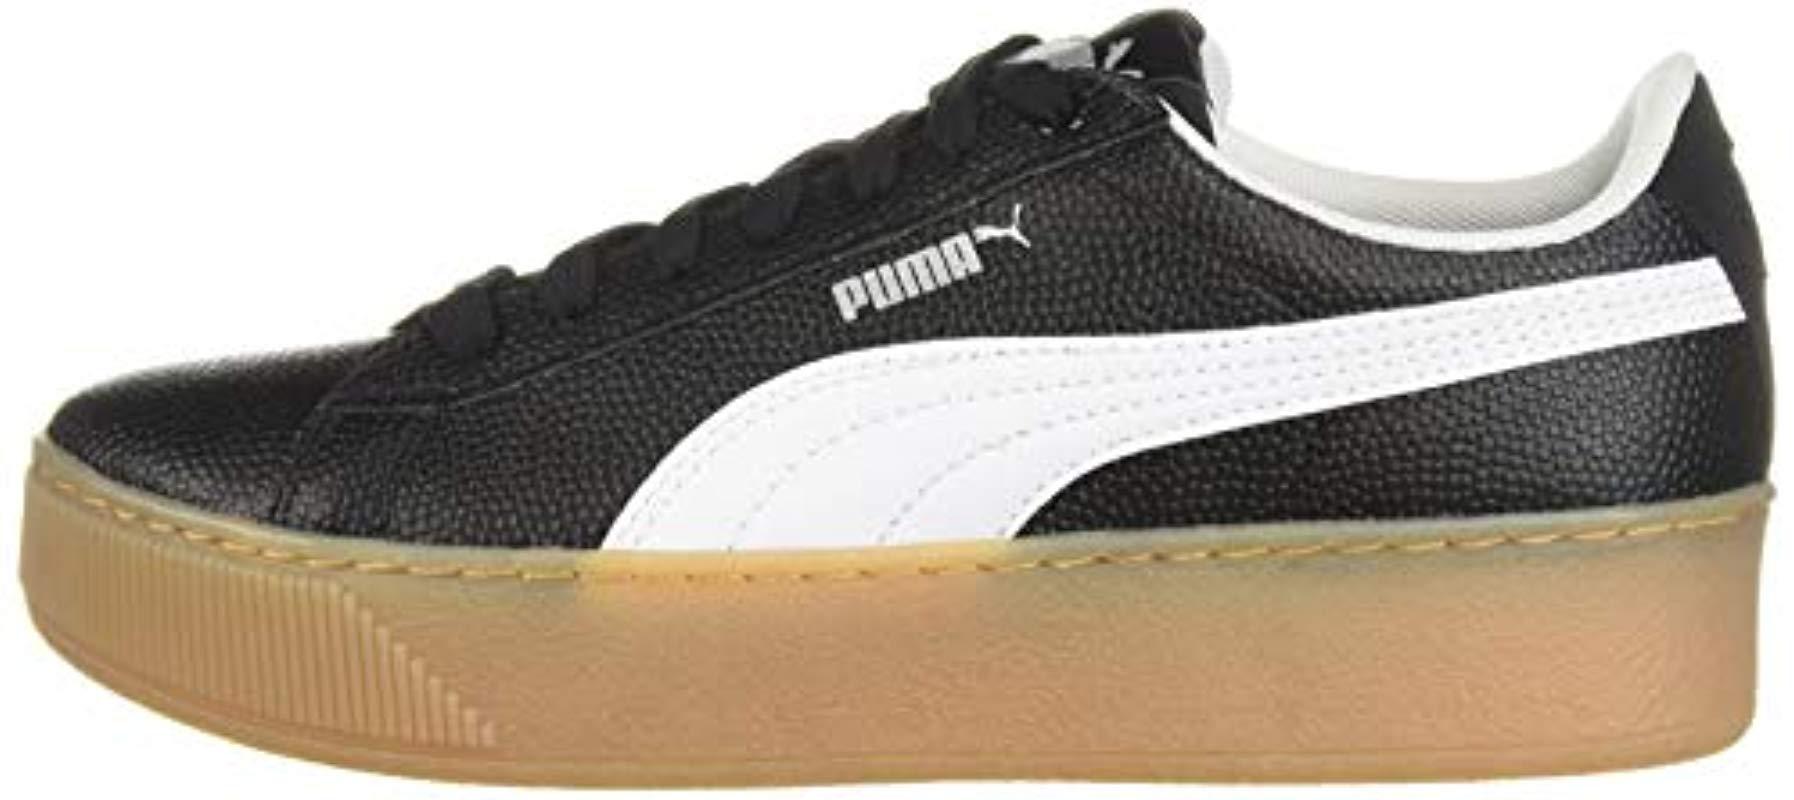 puma vikky platform black and white